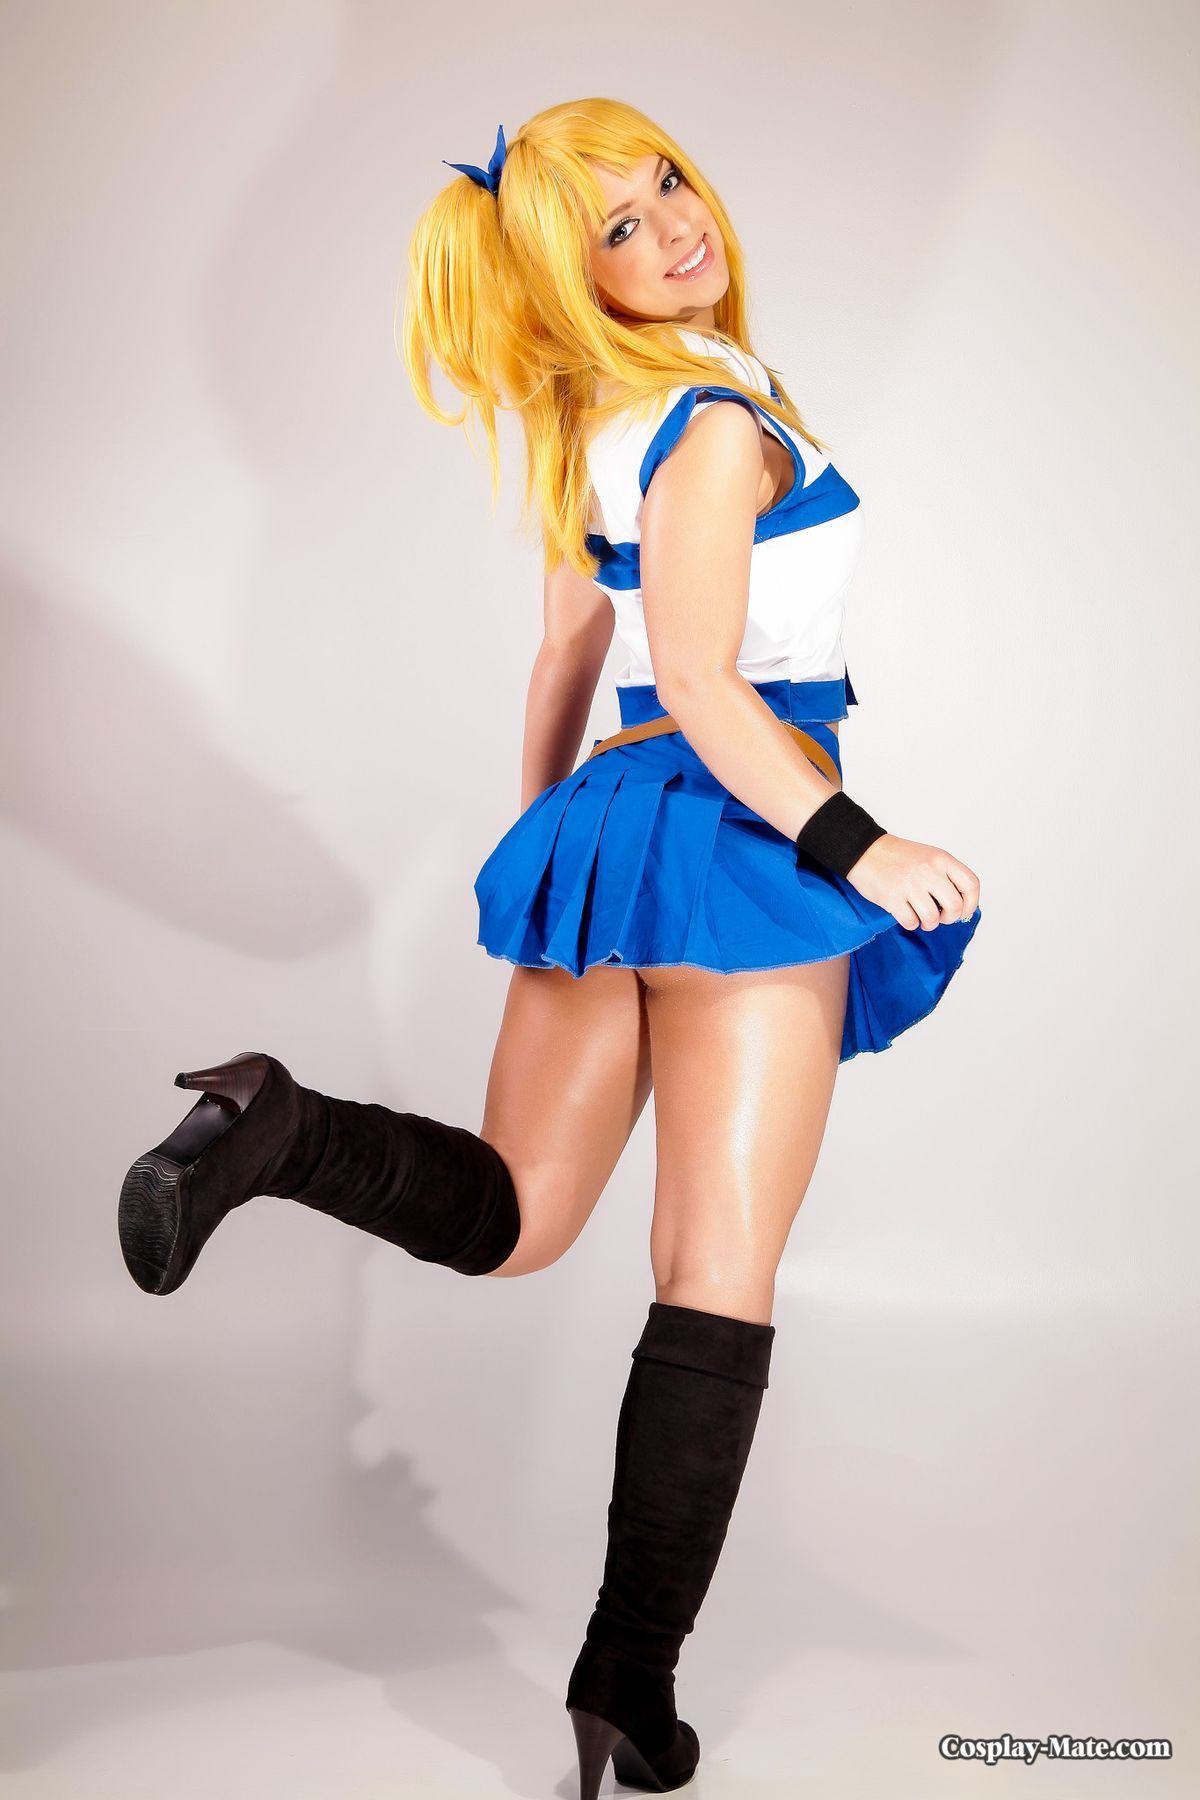 Lucy heartfilia cosplay